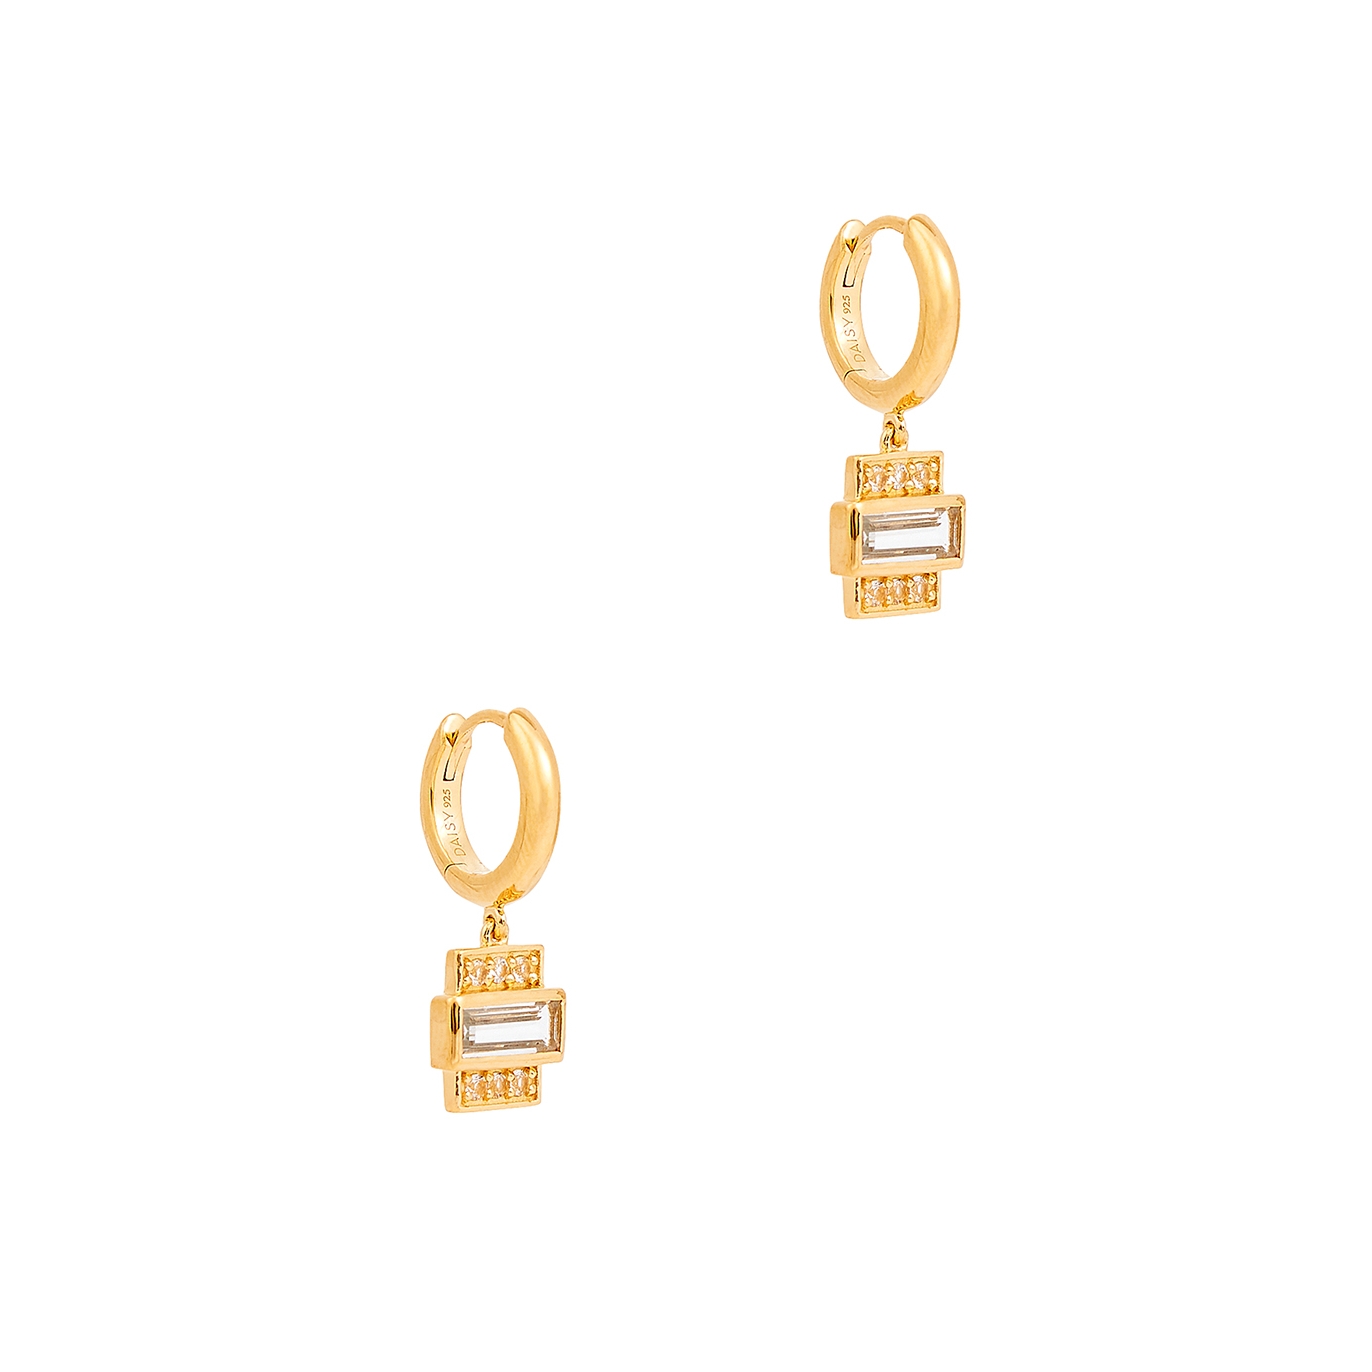 Daisy London Beloved White Topaz 18kt Gold-plated Drop Earrings